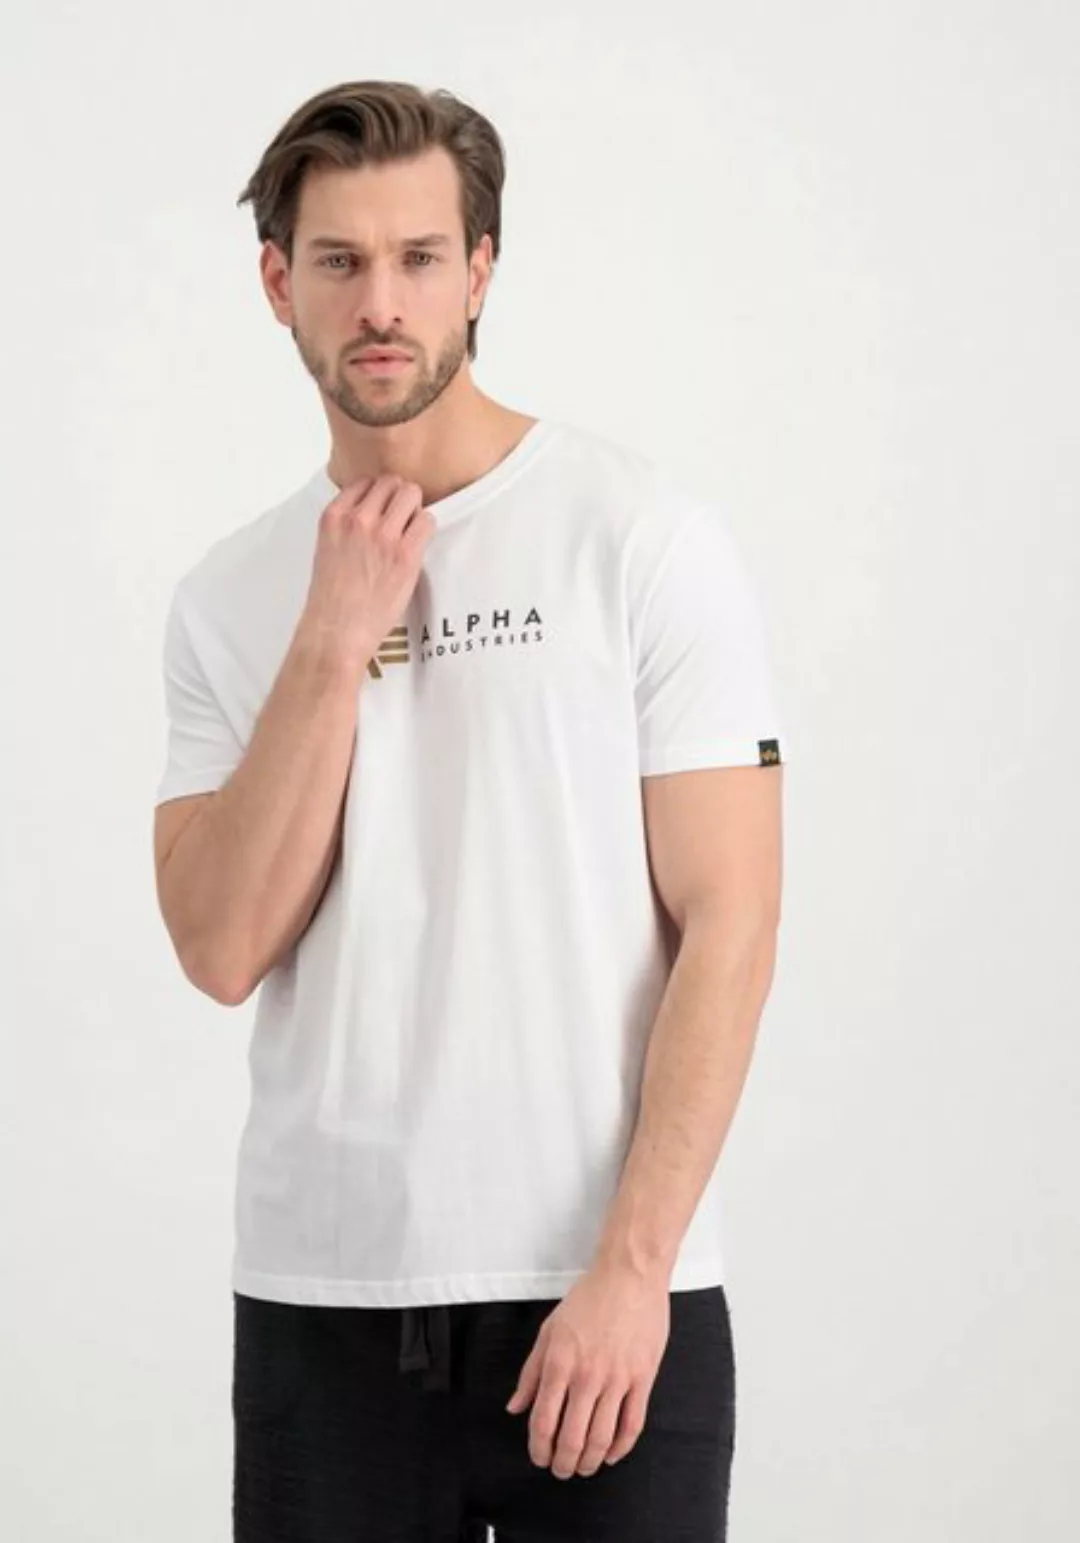 Alpha Industries T-Shirt "ALPHA INDUSTRIES Men - T-Shirts Alpha Label T" günstig online kaufen